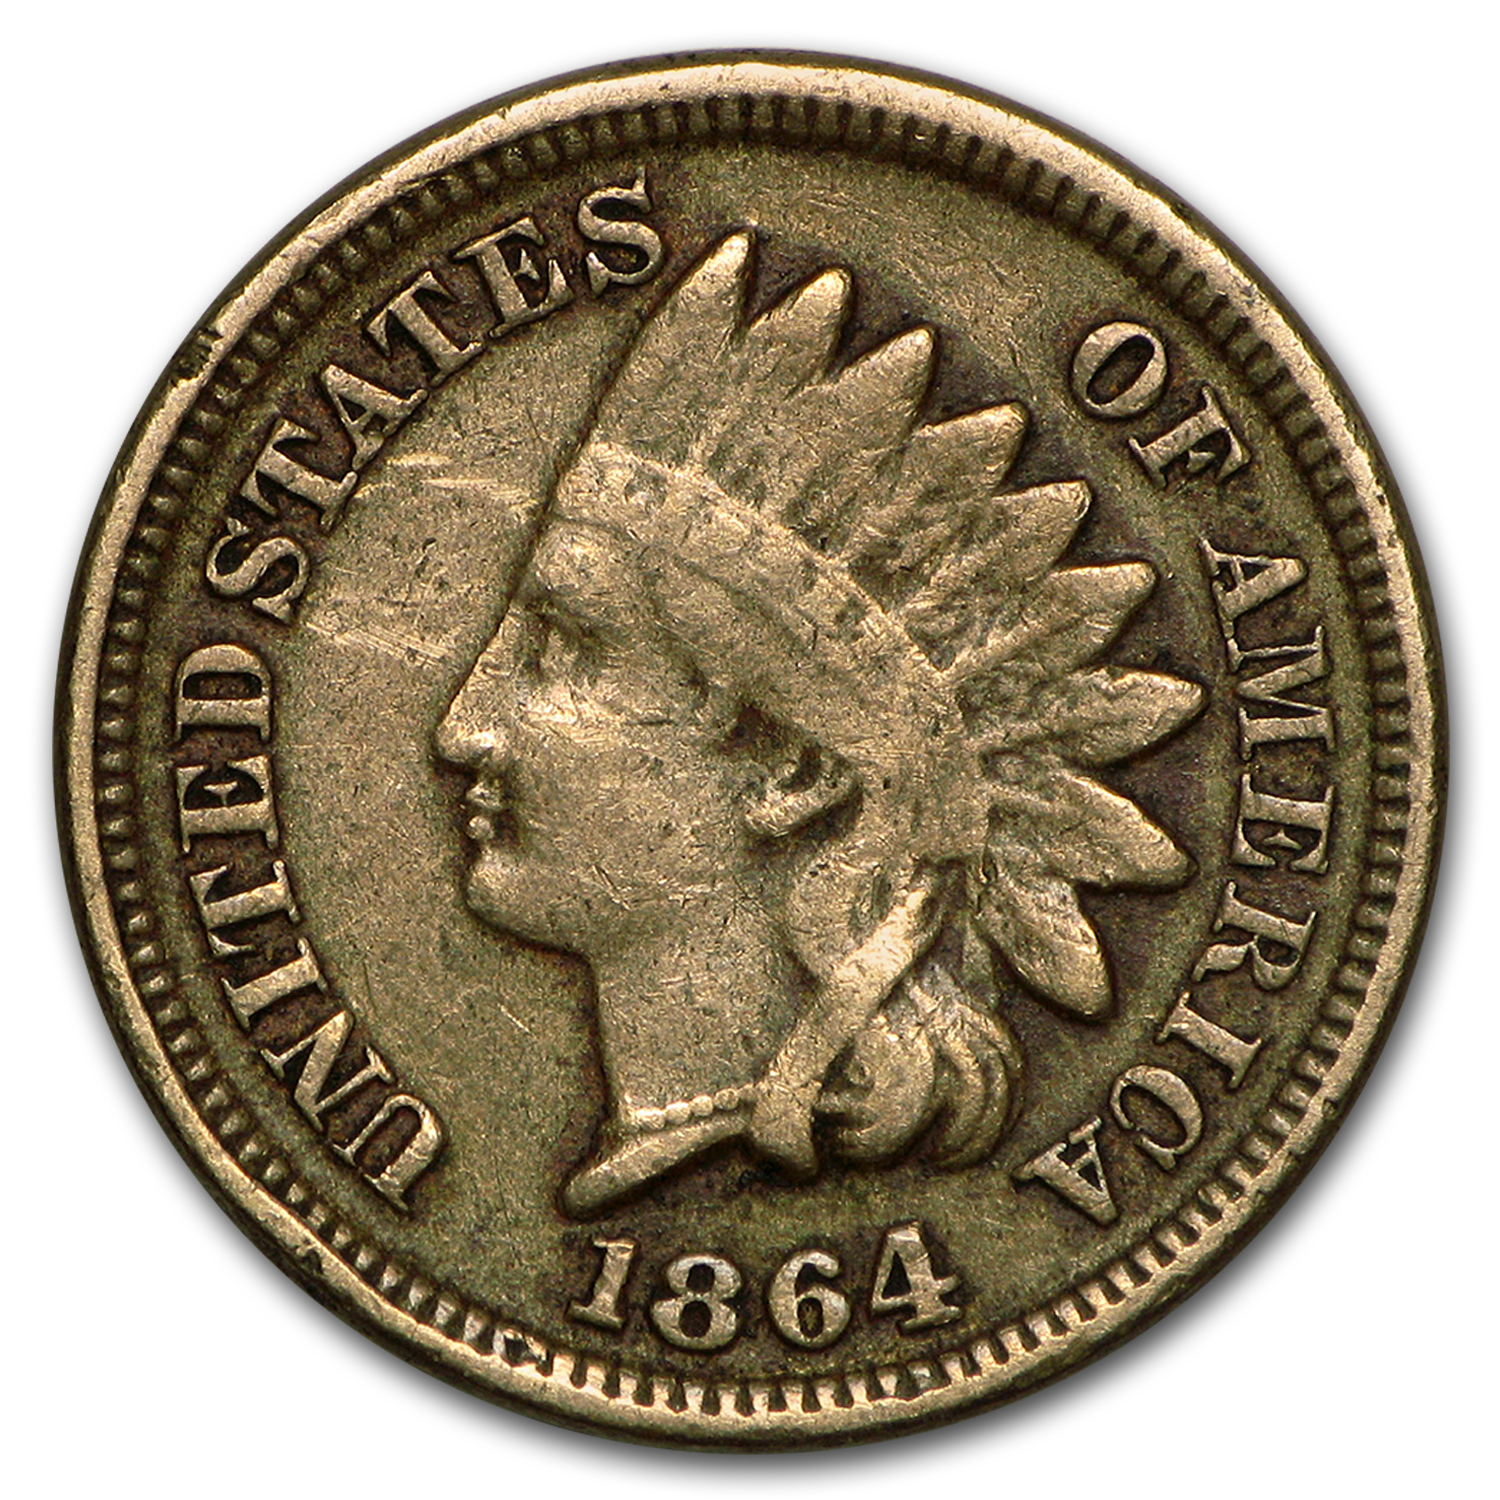 Buy 1864 Indian Head Cent Copper-Nickel Fine